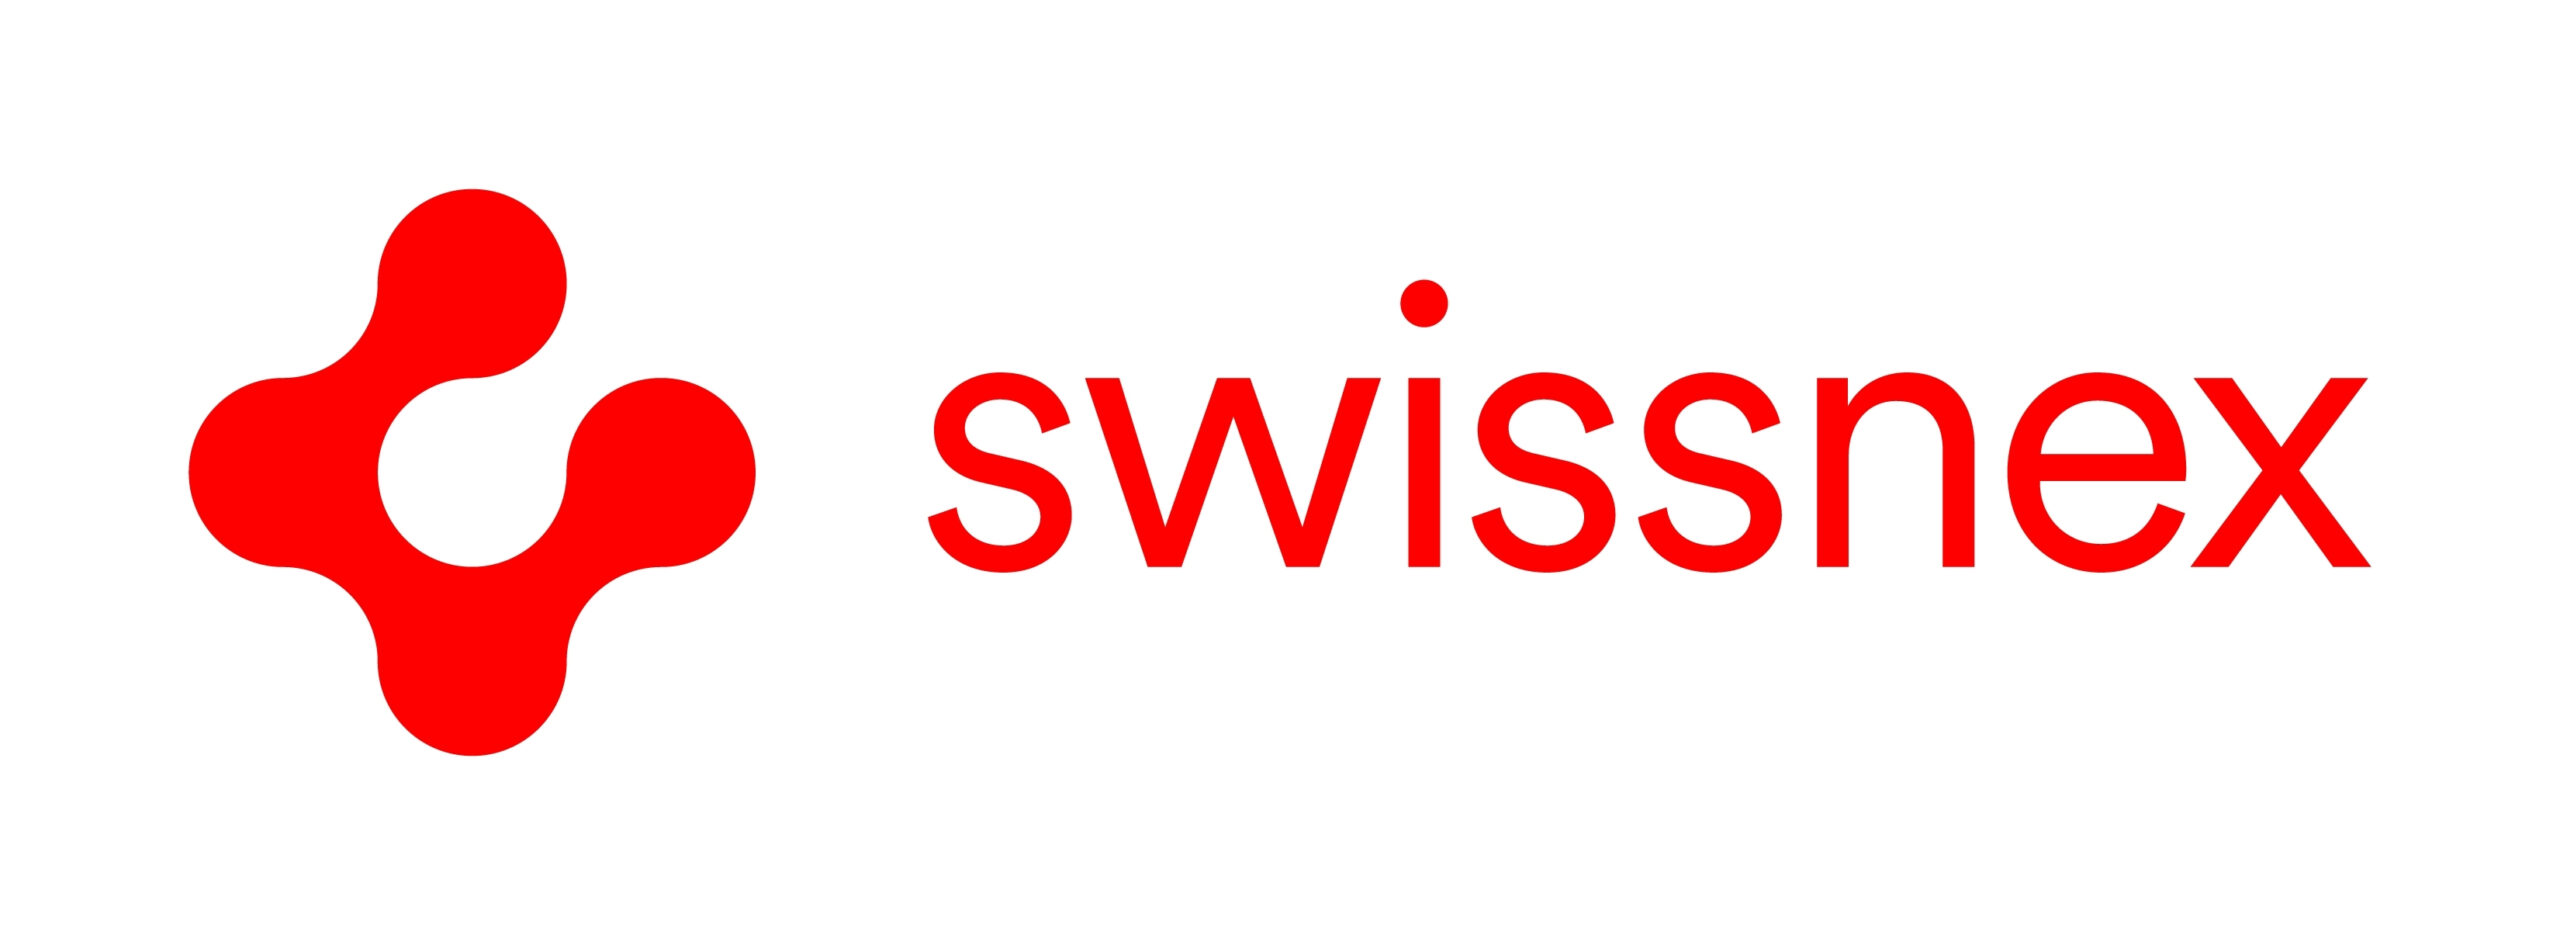 Swissnex_logo_POS_RGB-scaled-1.jpg